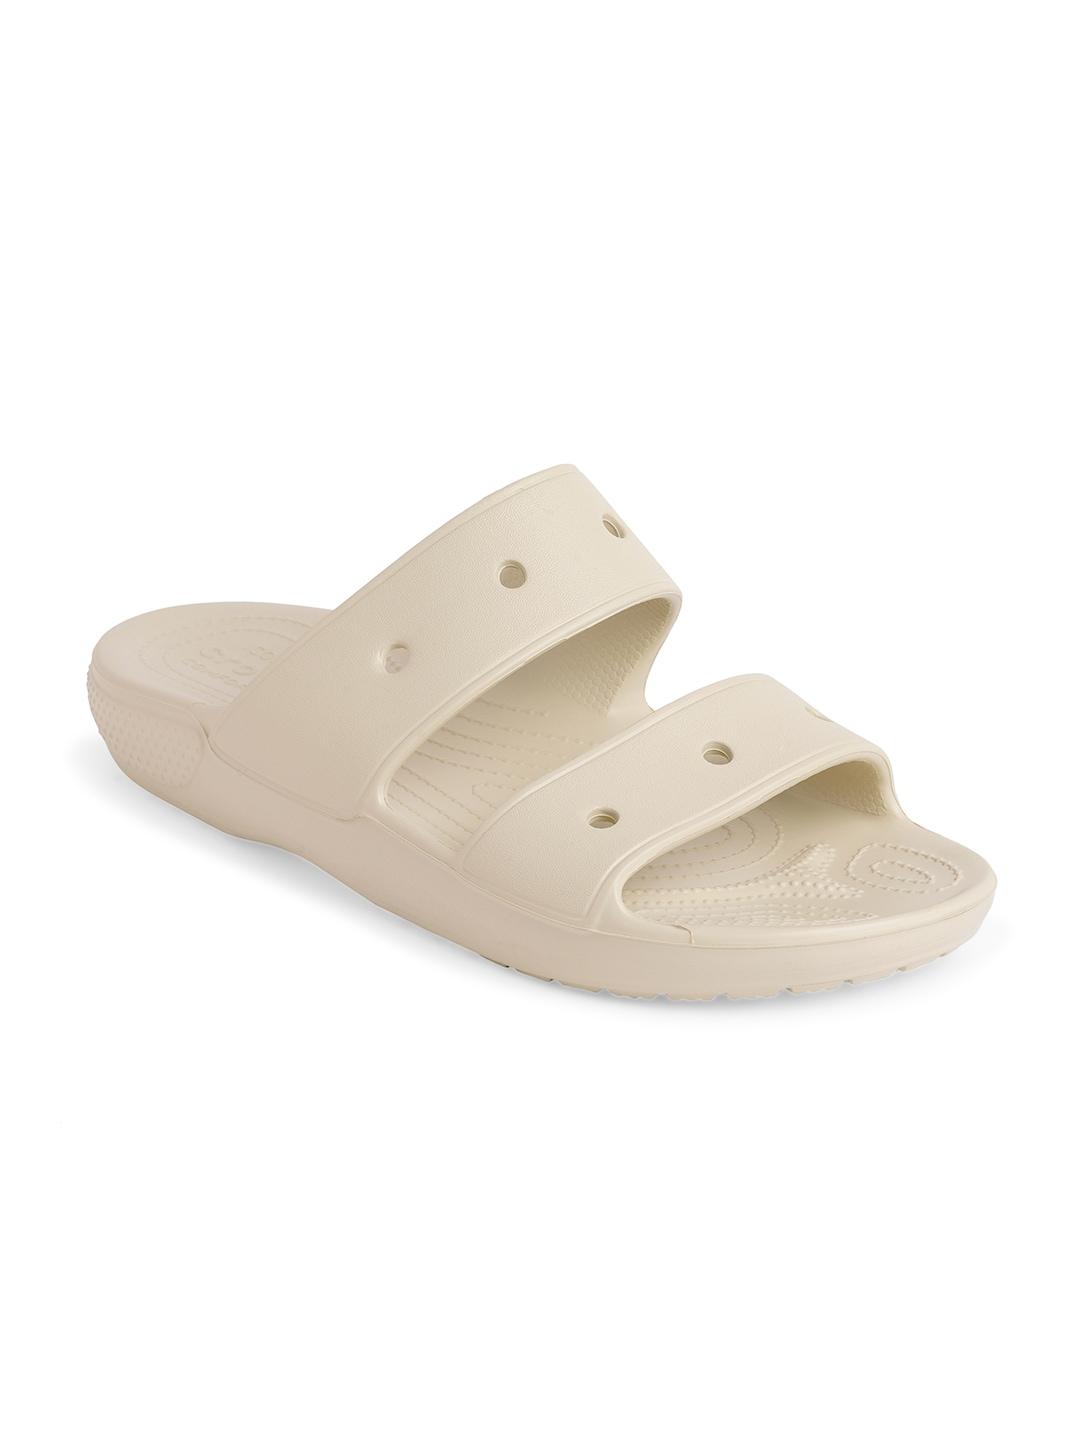 Crocs Unisex Off-White Solid Comfort Sandals